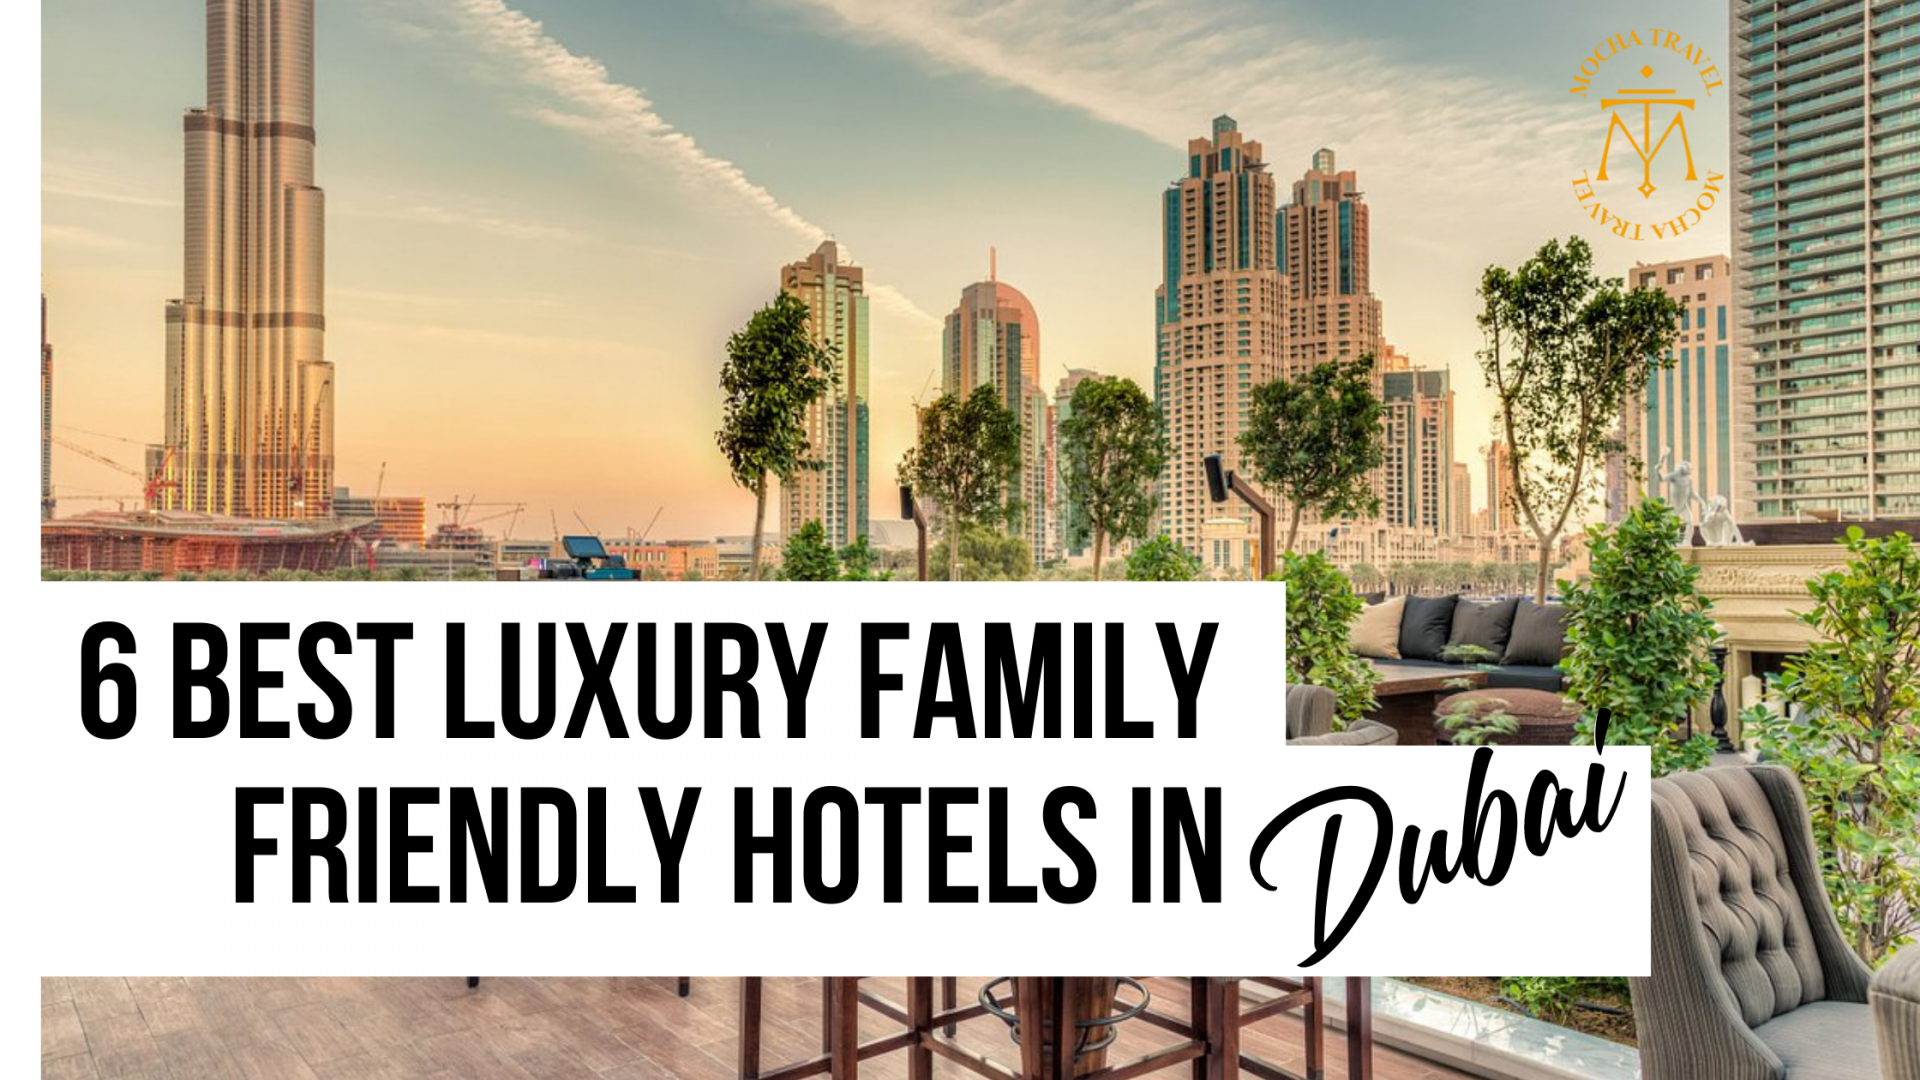 Luxury family-friendly hotels